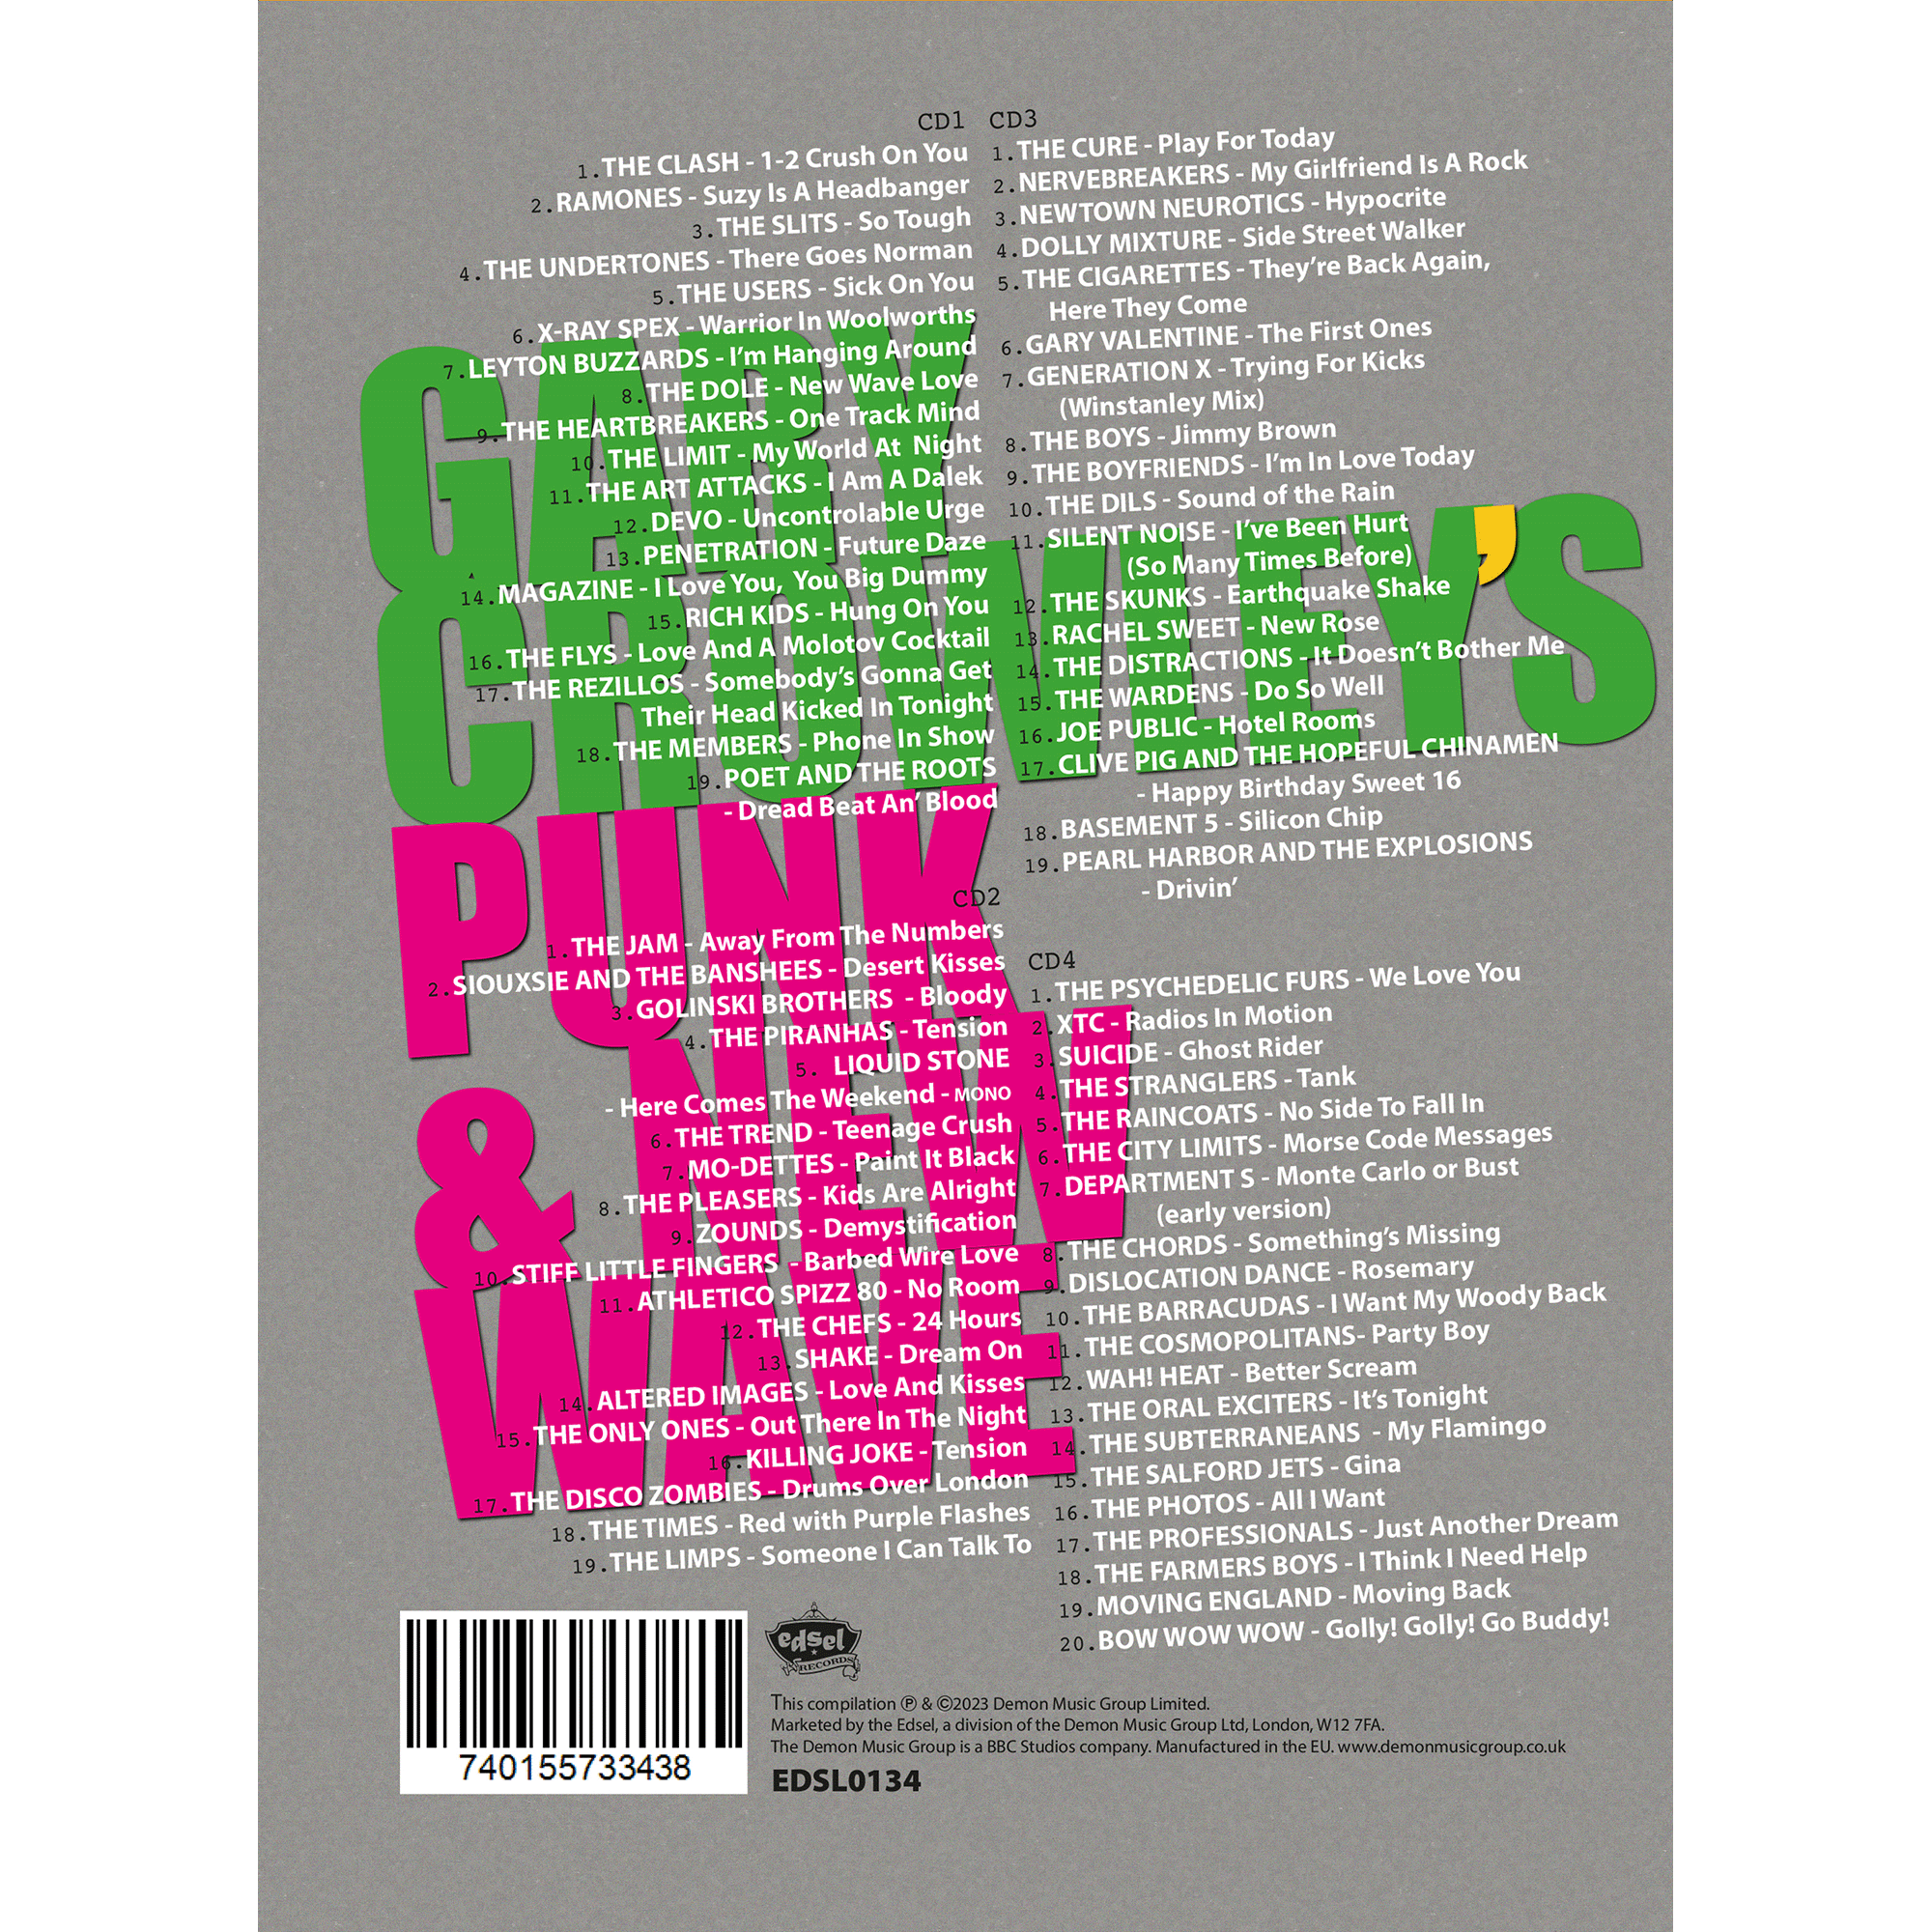 Various Artists - Gary Crowley's Punk and New Wave 2: 4CD Box Set